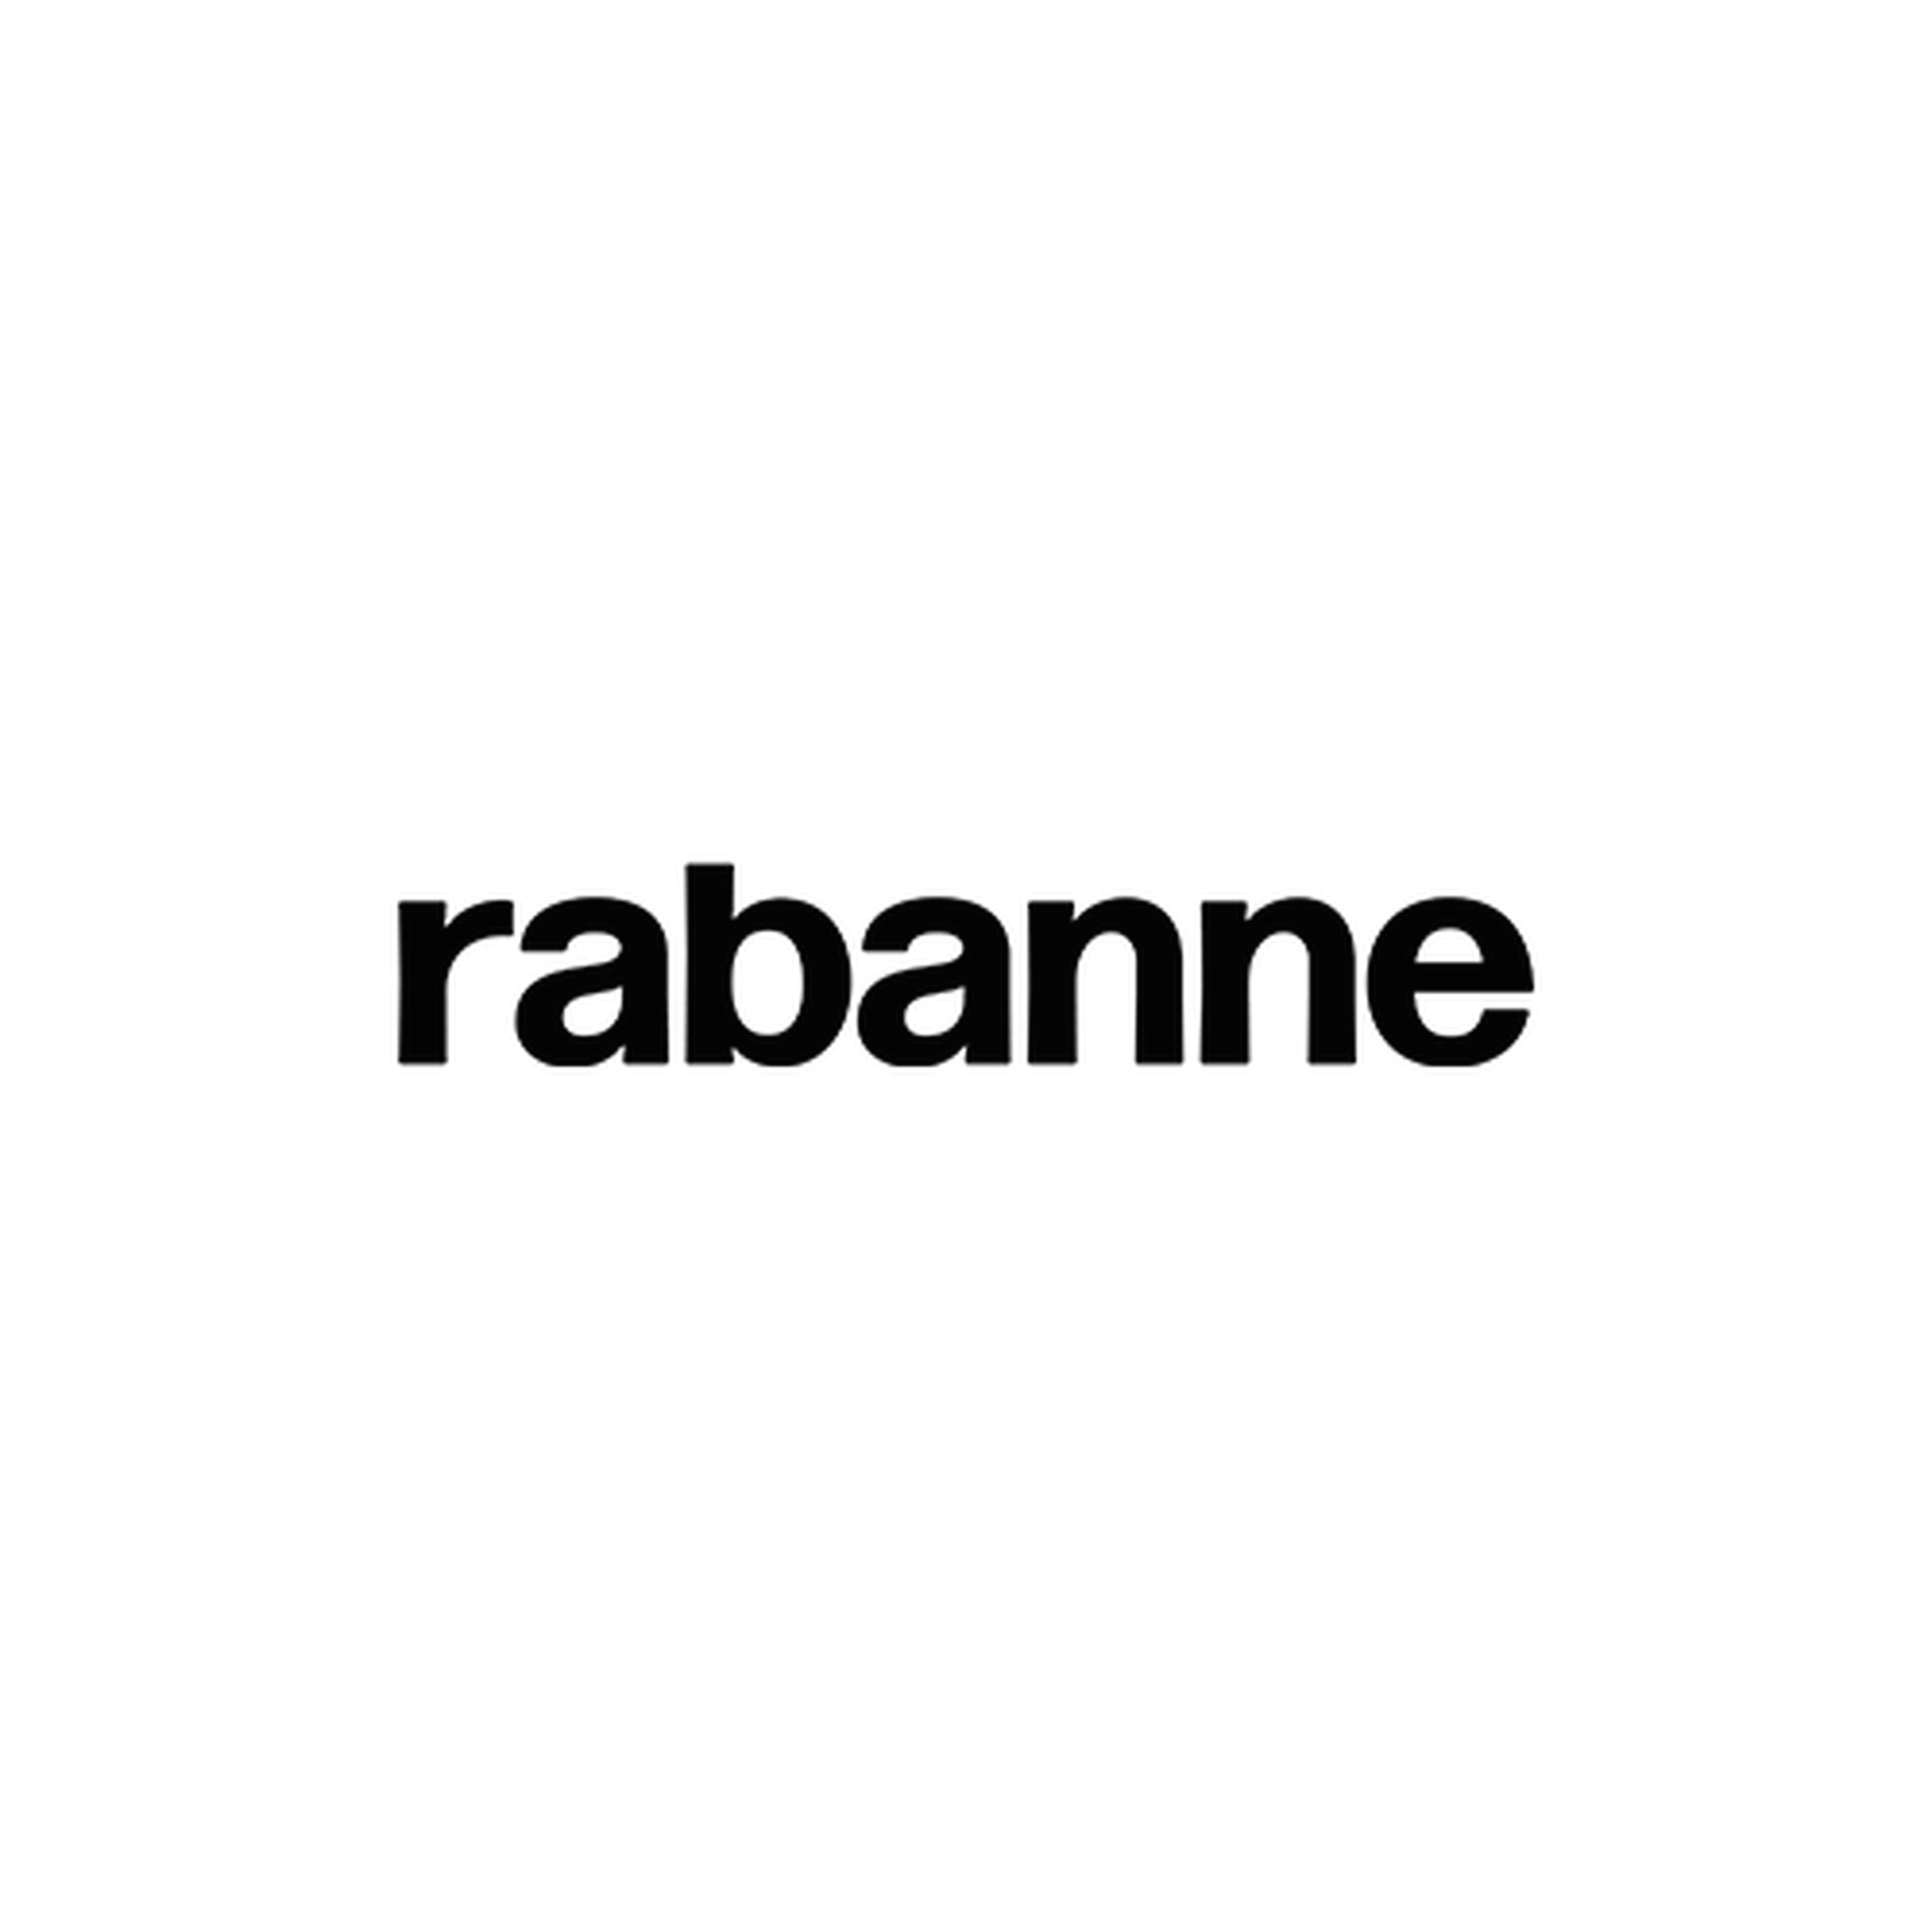 Paco Rabanne logotype